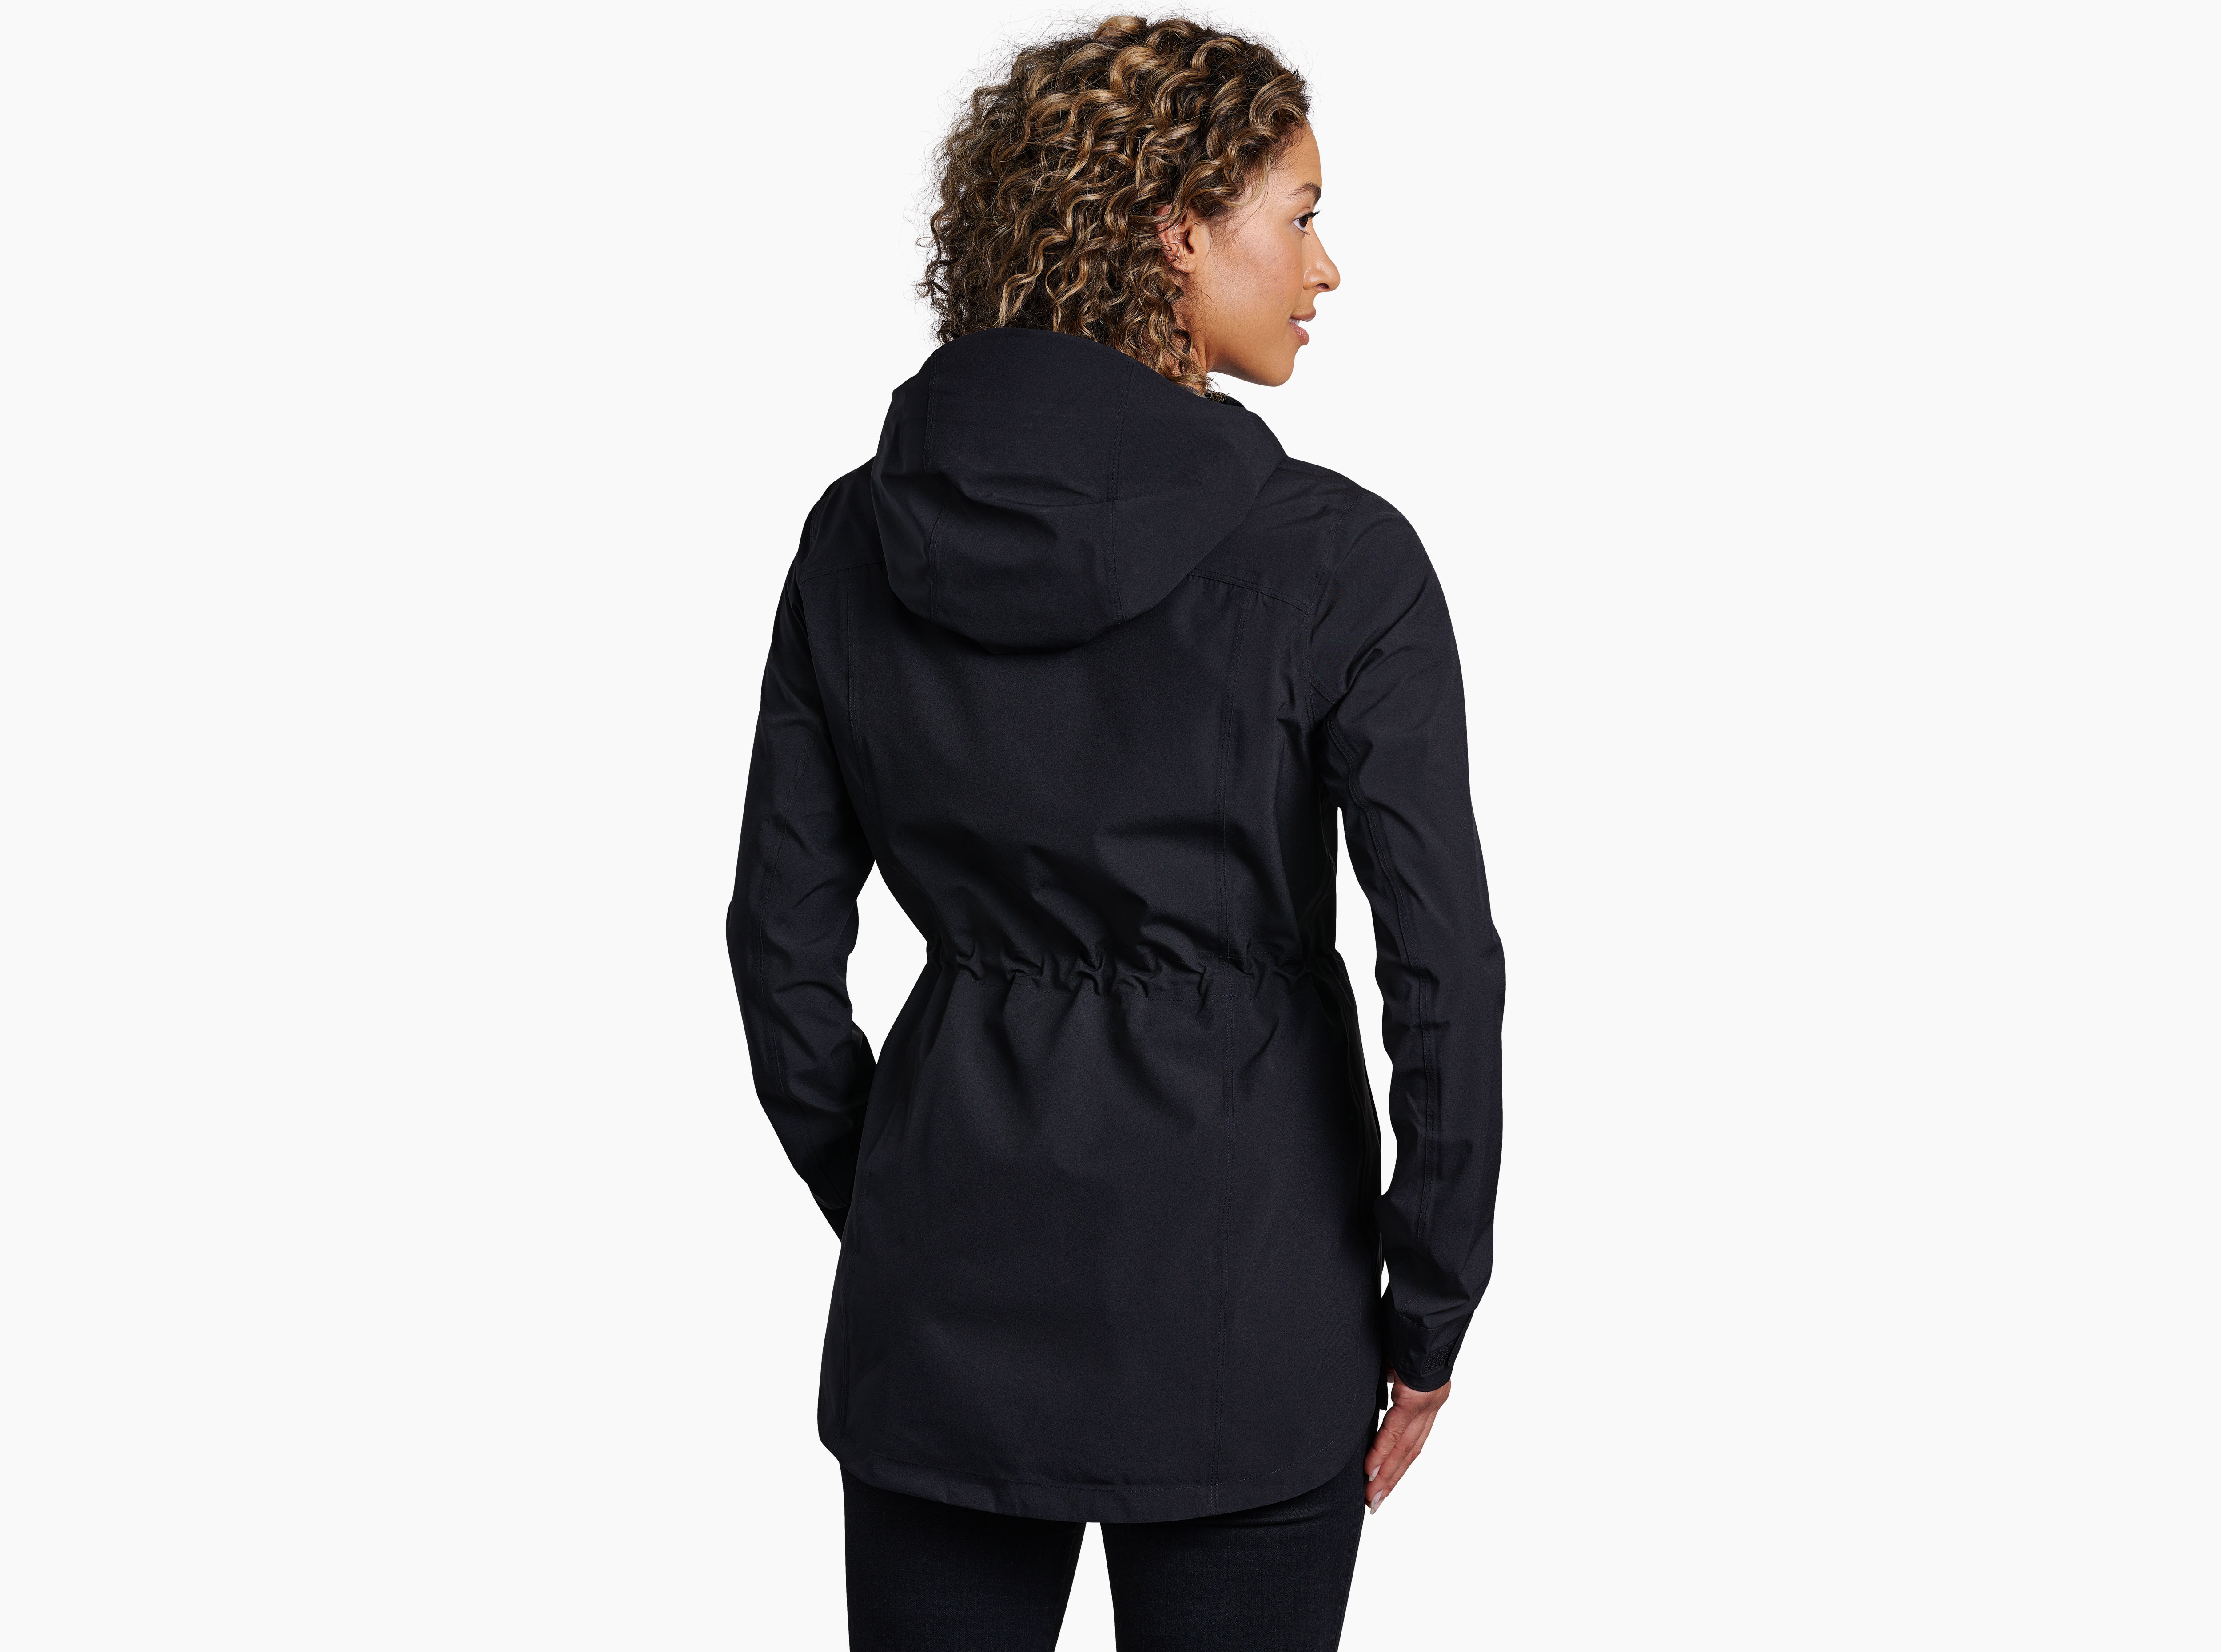 Stretch Voyagr™ Jacket in Women's Outerwear